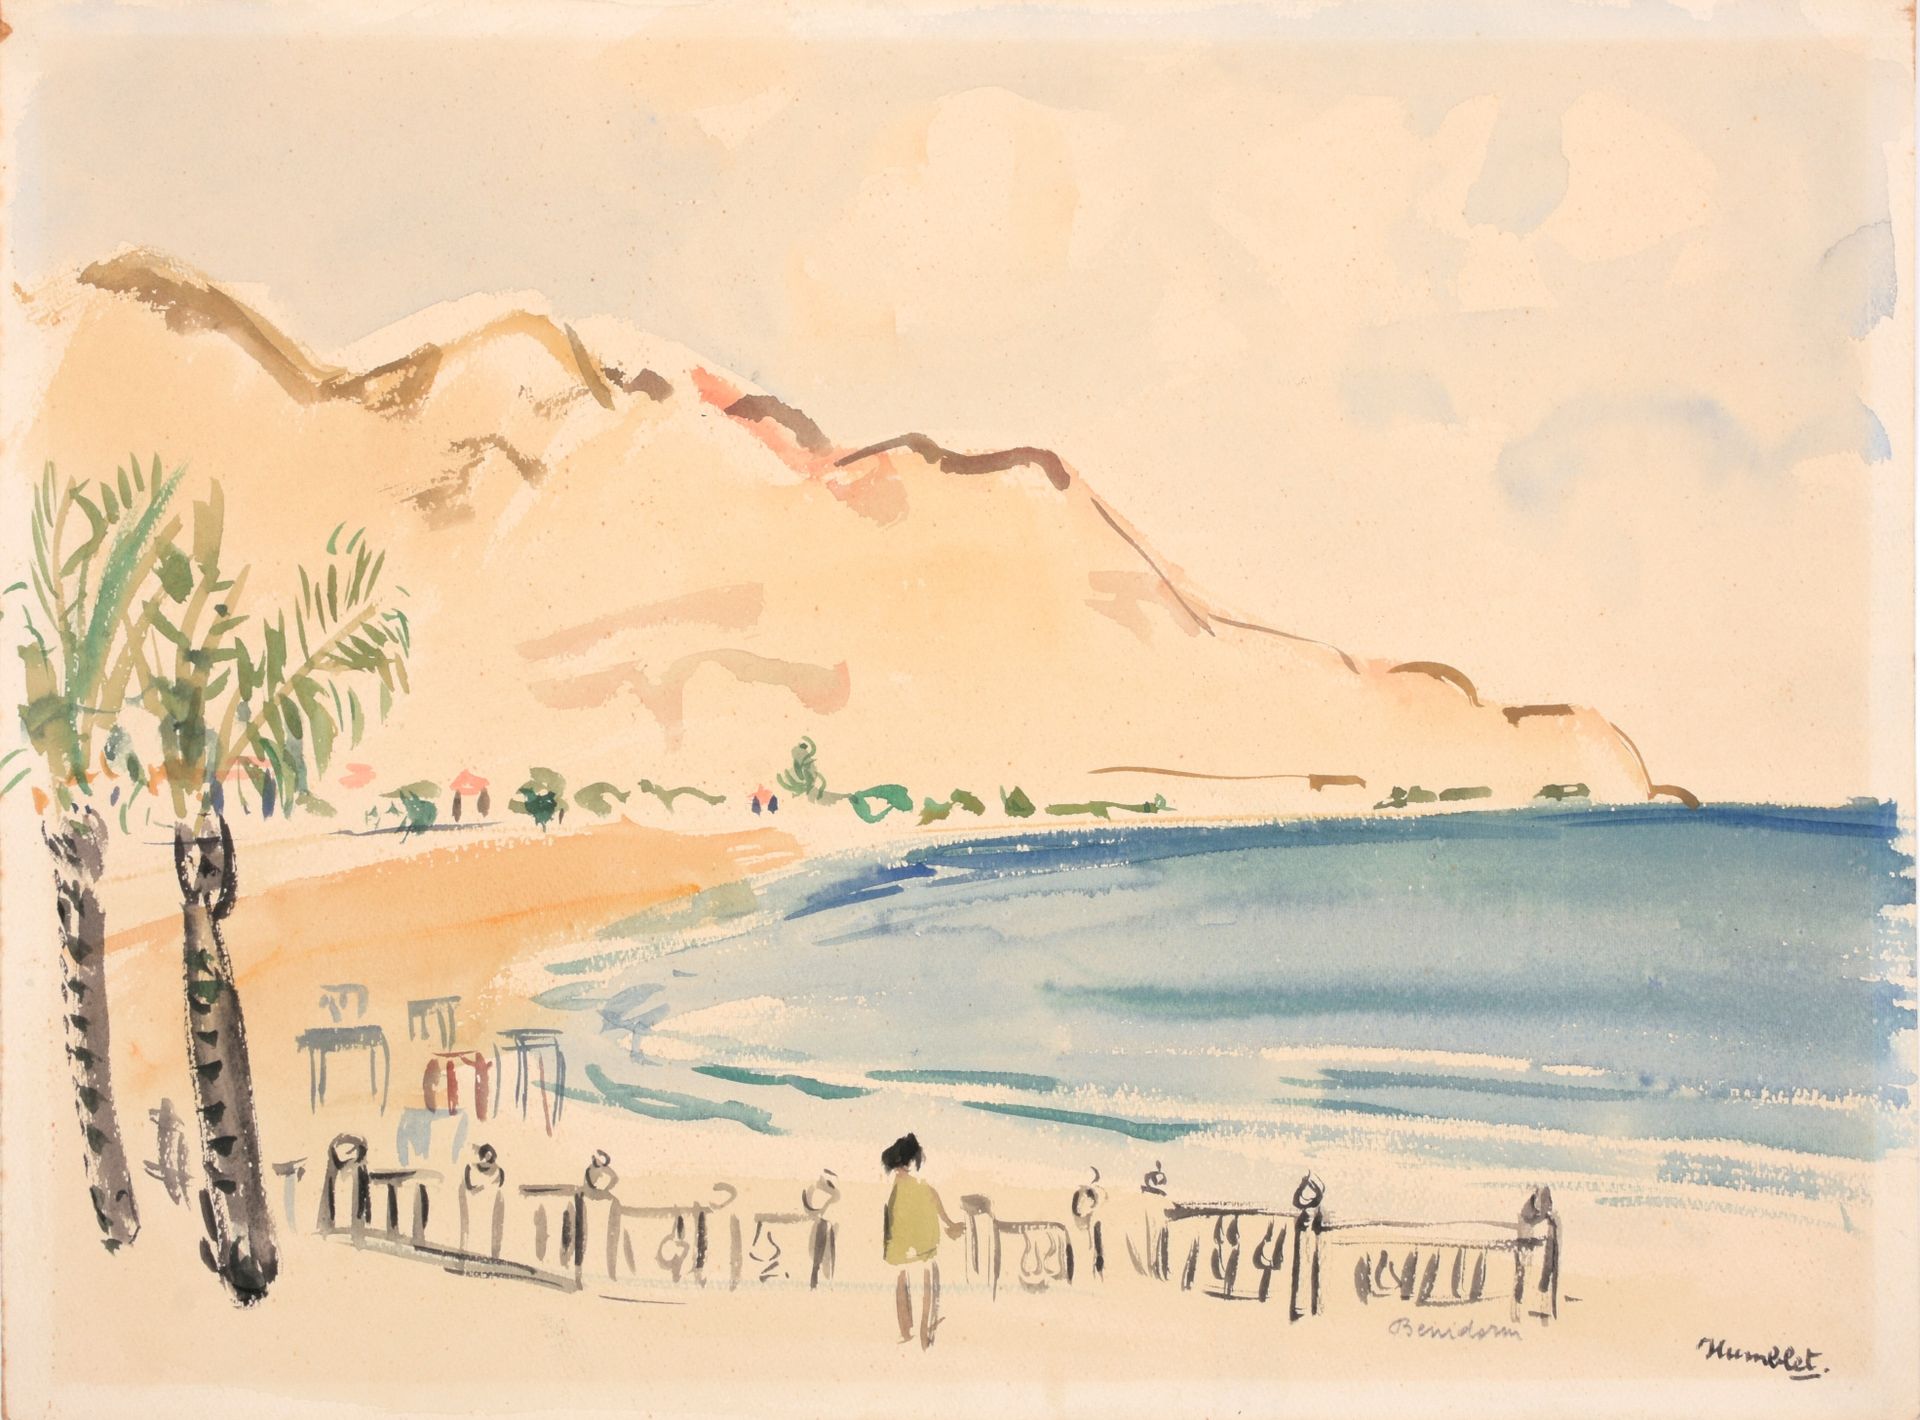 HUBLET, Theo (1916-2006) 在贝尼多姆的Strandzicht

水彩画(27 x 36厘米)，从右到左